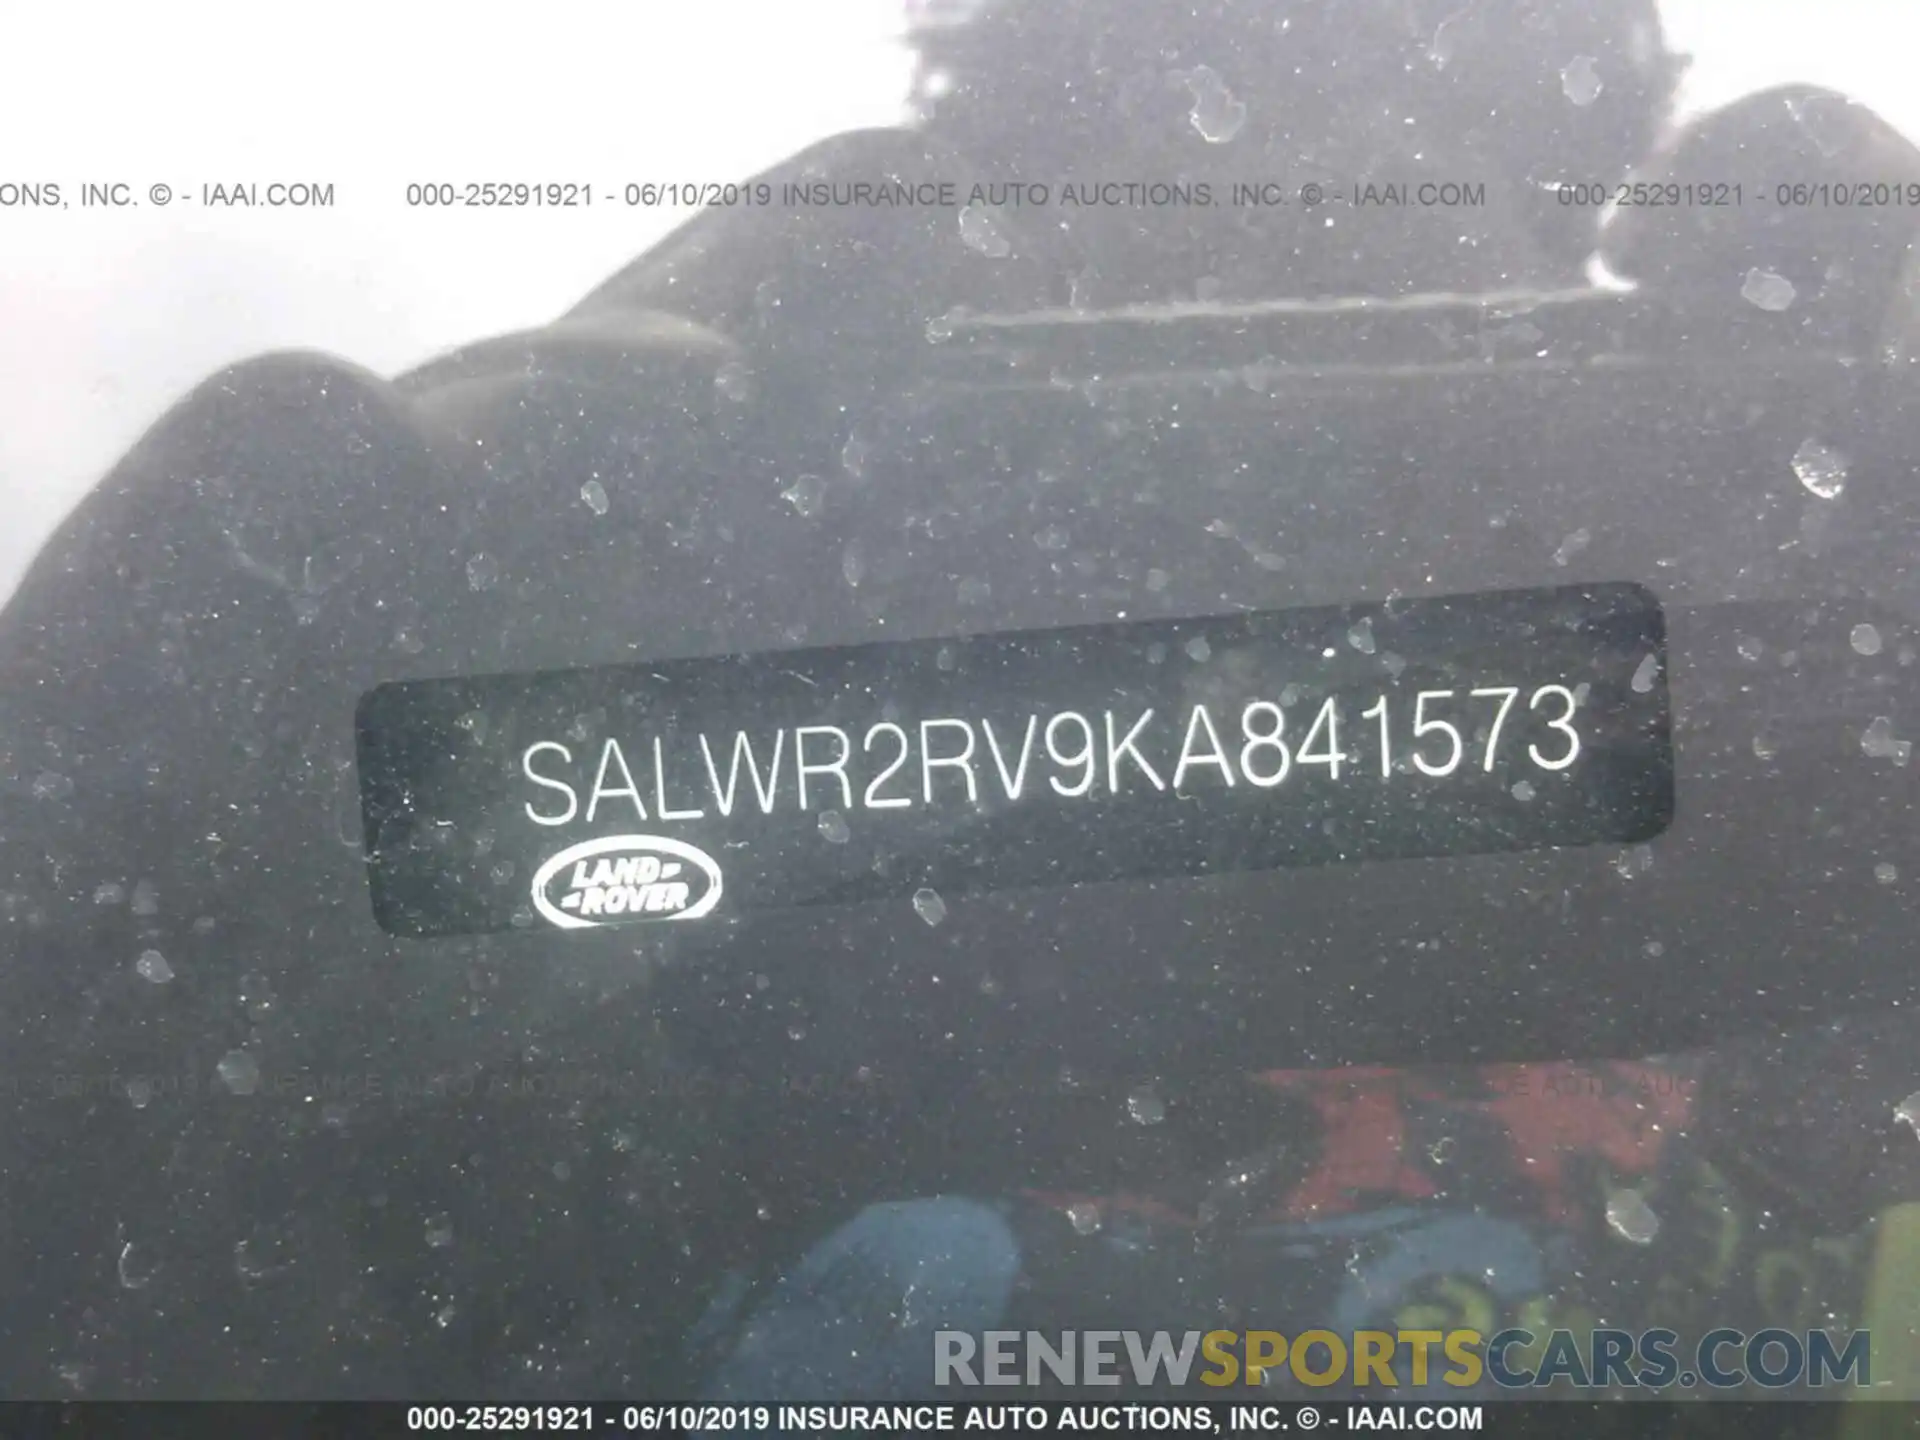 9 Photograph of a damaged car SALWR2RV9KA841573 LAND ROVER RANGE ROVER SPORT 2019